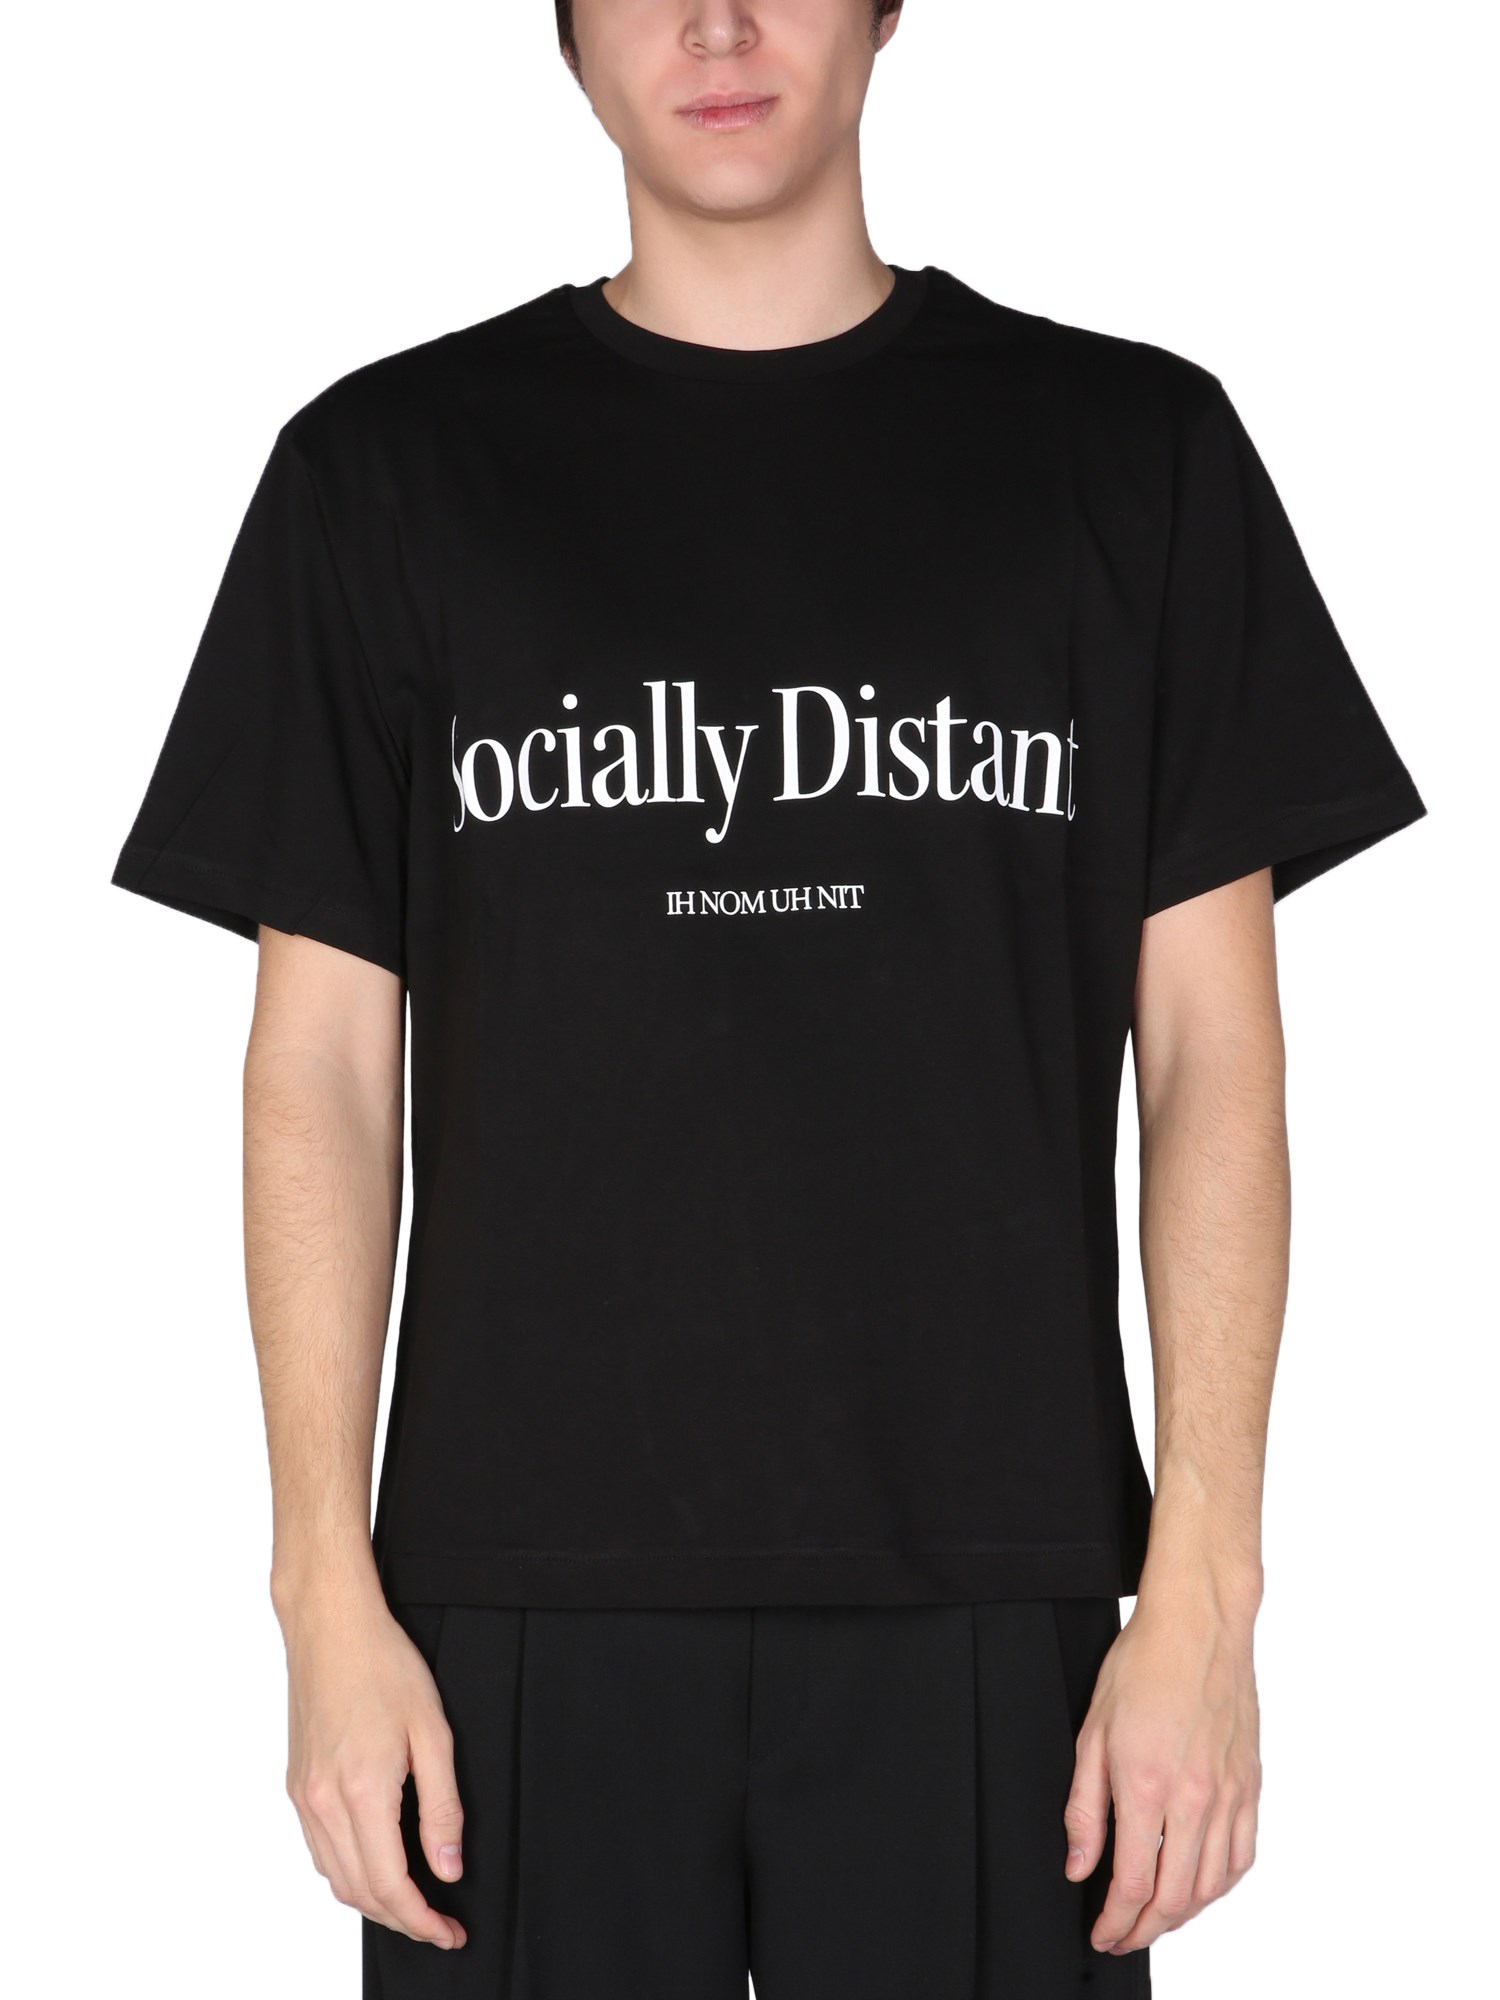 ih nom uh nit "socially distant" t-shirt